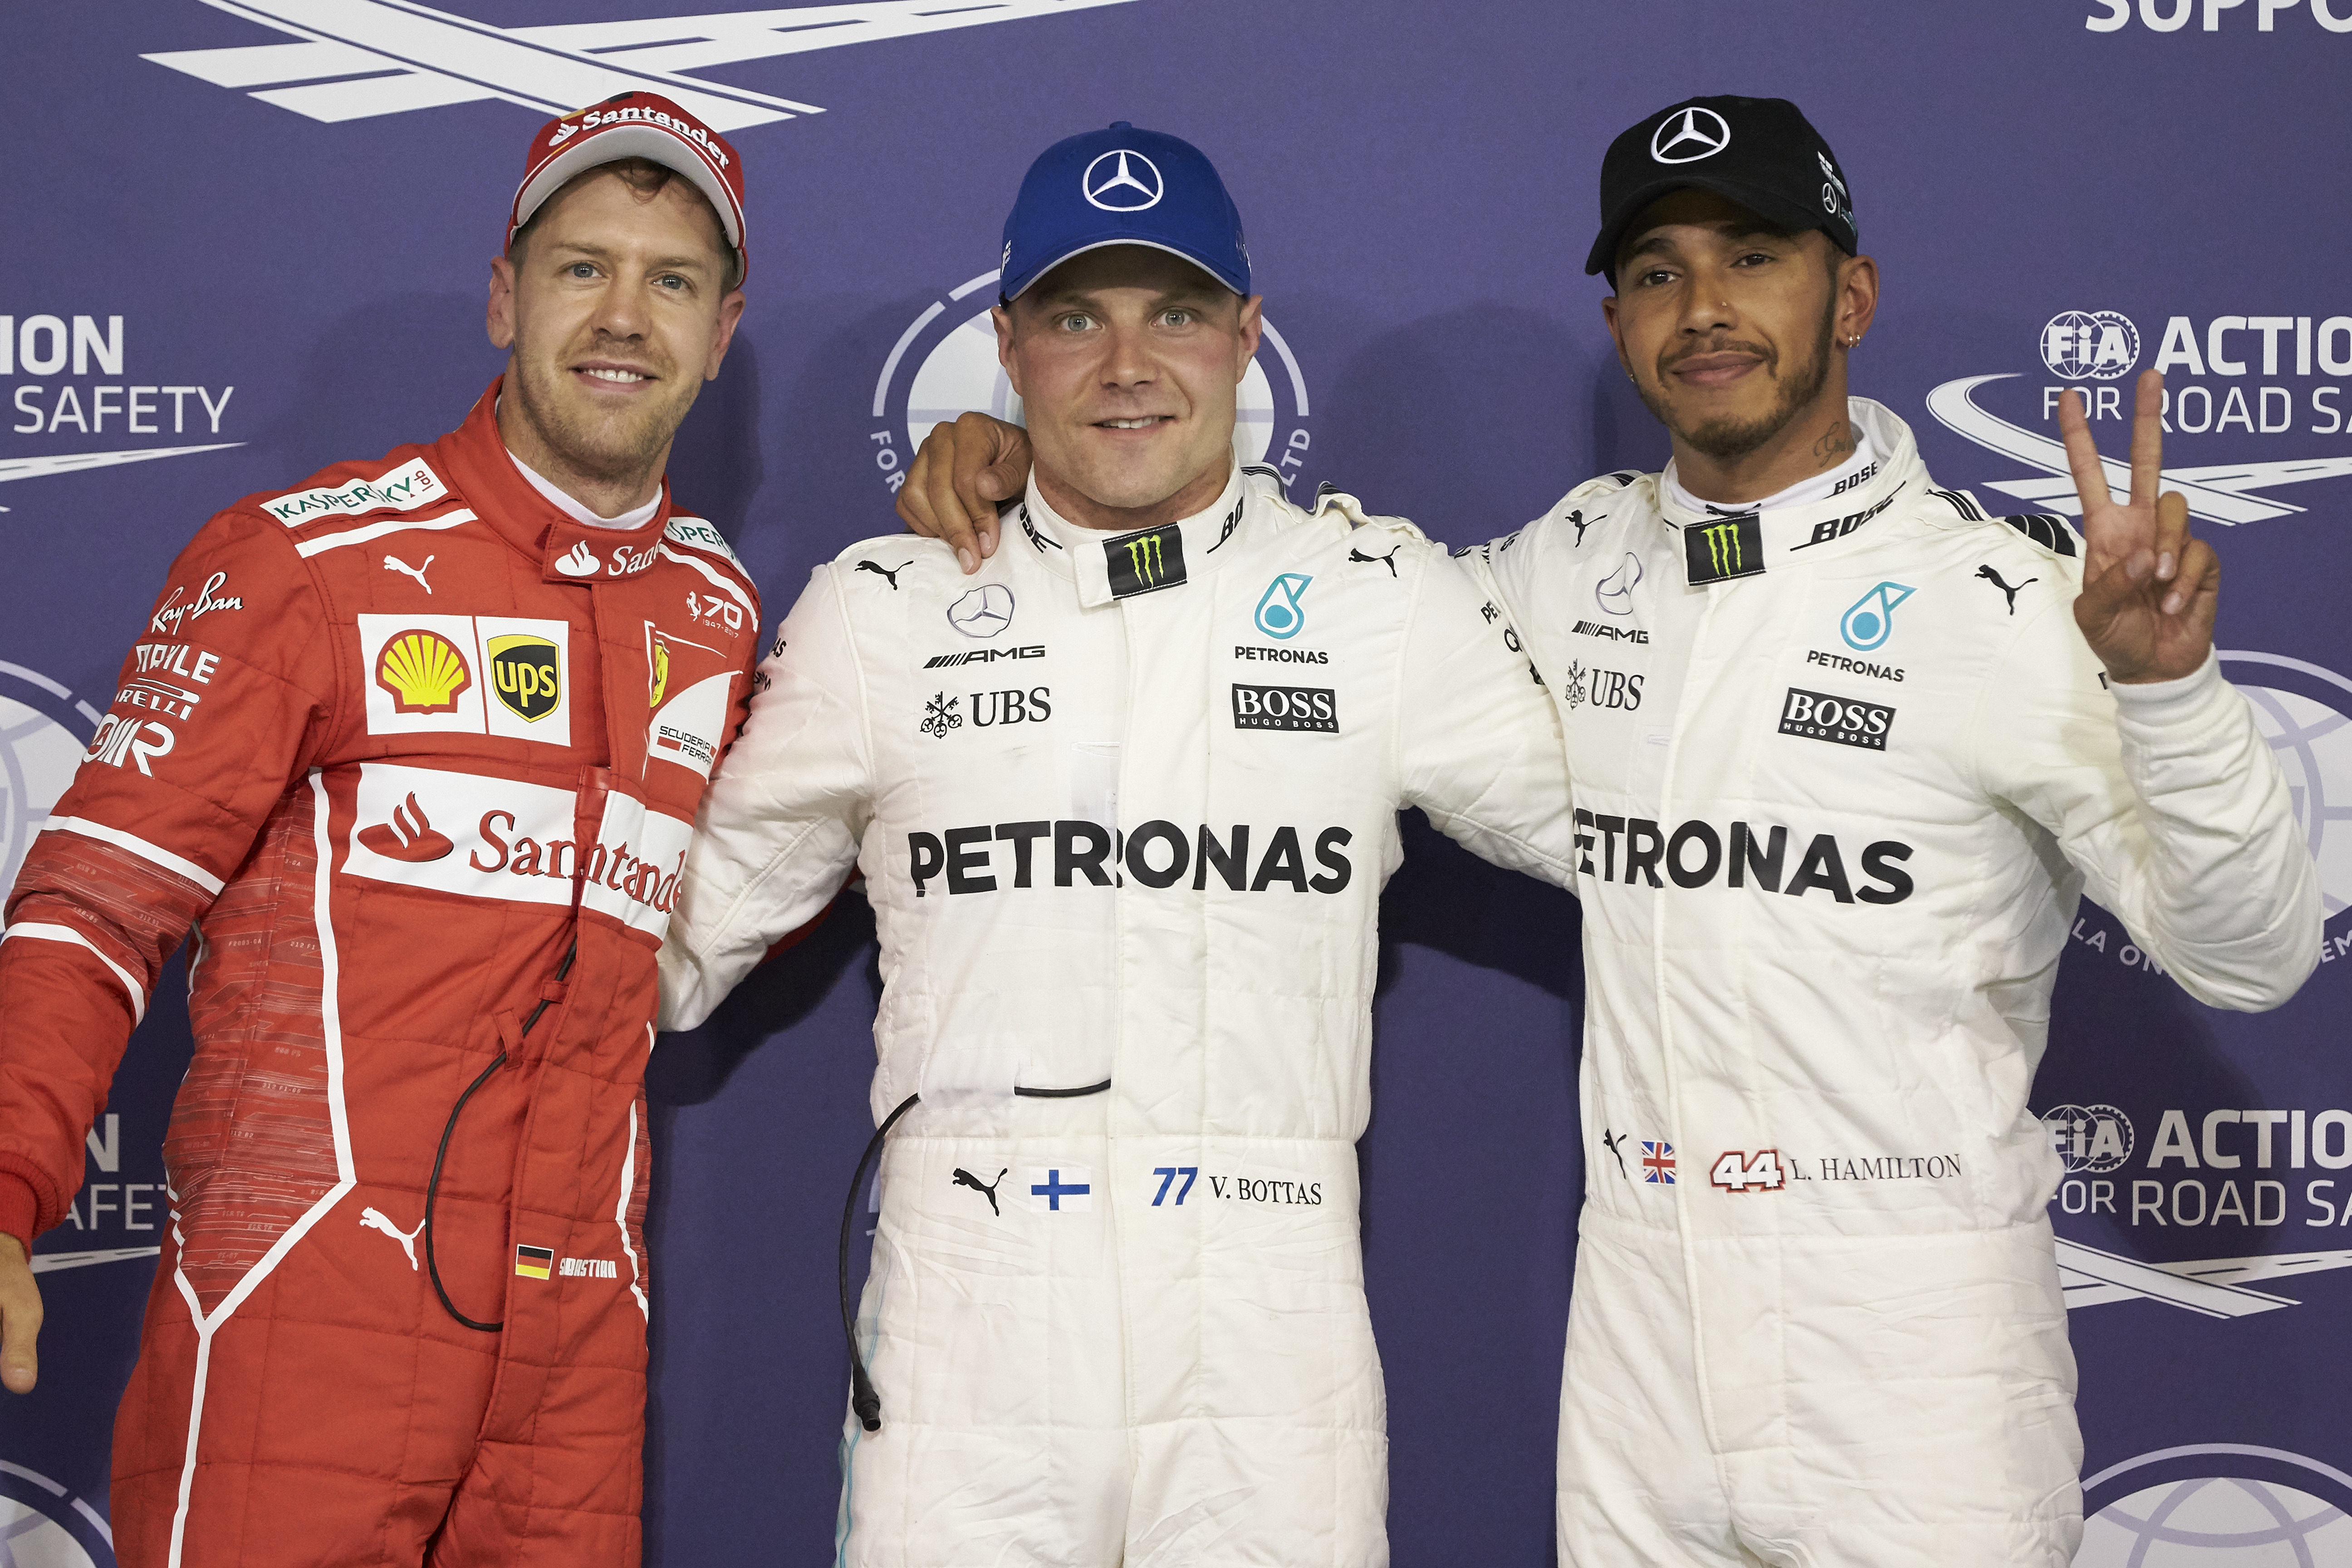 Formel 1 - Mercedes-AMG Petronas Motorsport, Großer Preis von Abu Dhabi 2017. Lewis Hamilton, Valtteri Bottas 

Formula One - Mercedes-AMG Petronas Motorsport, Abu Dhabi GP 2017. Lewis Hamilton, Valtteri Bottas